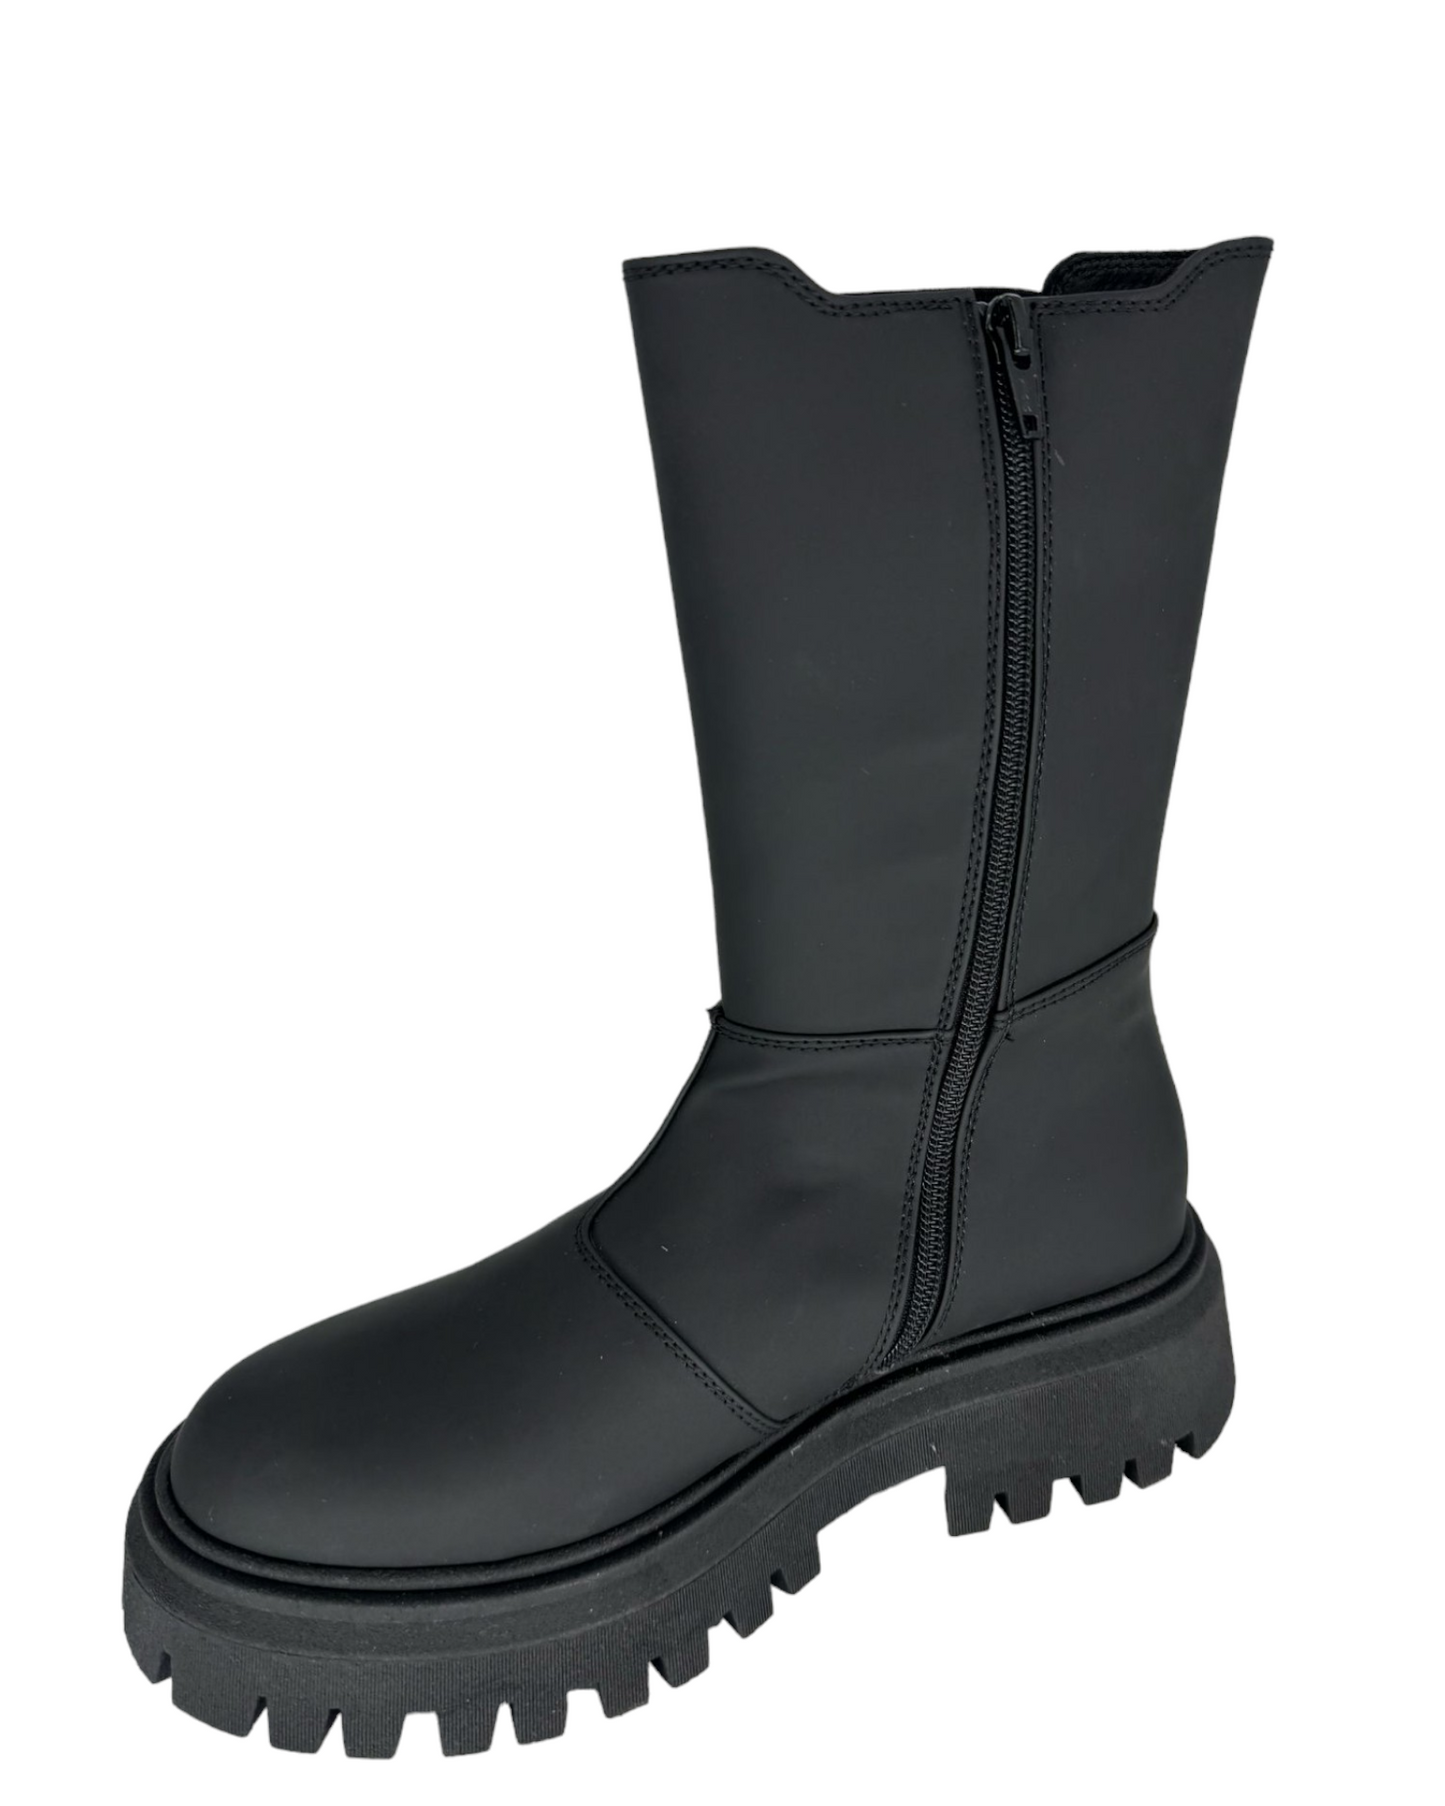 Rubber boot/ Wellingtons